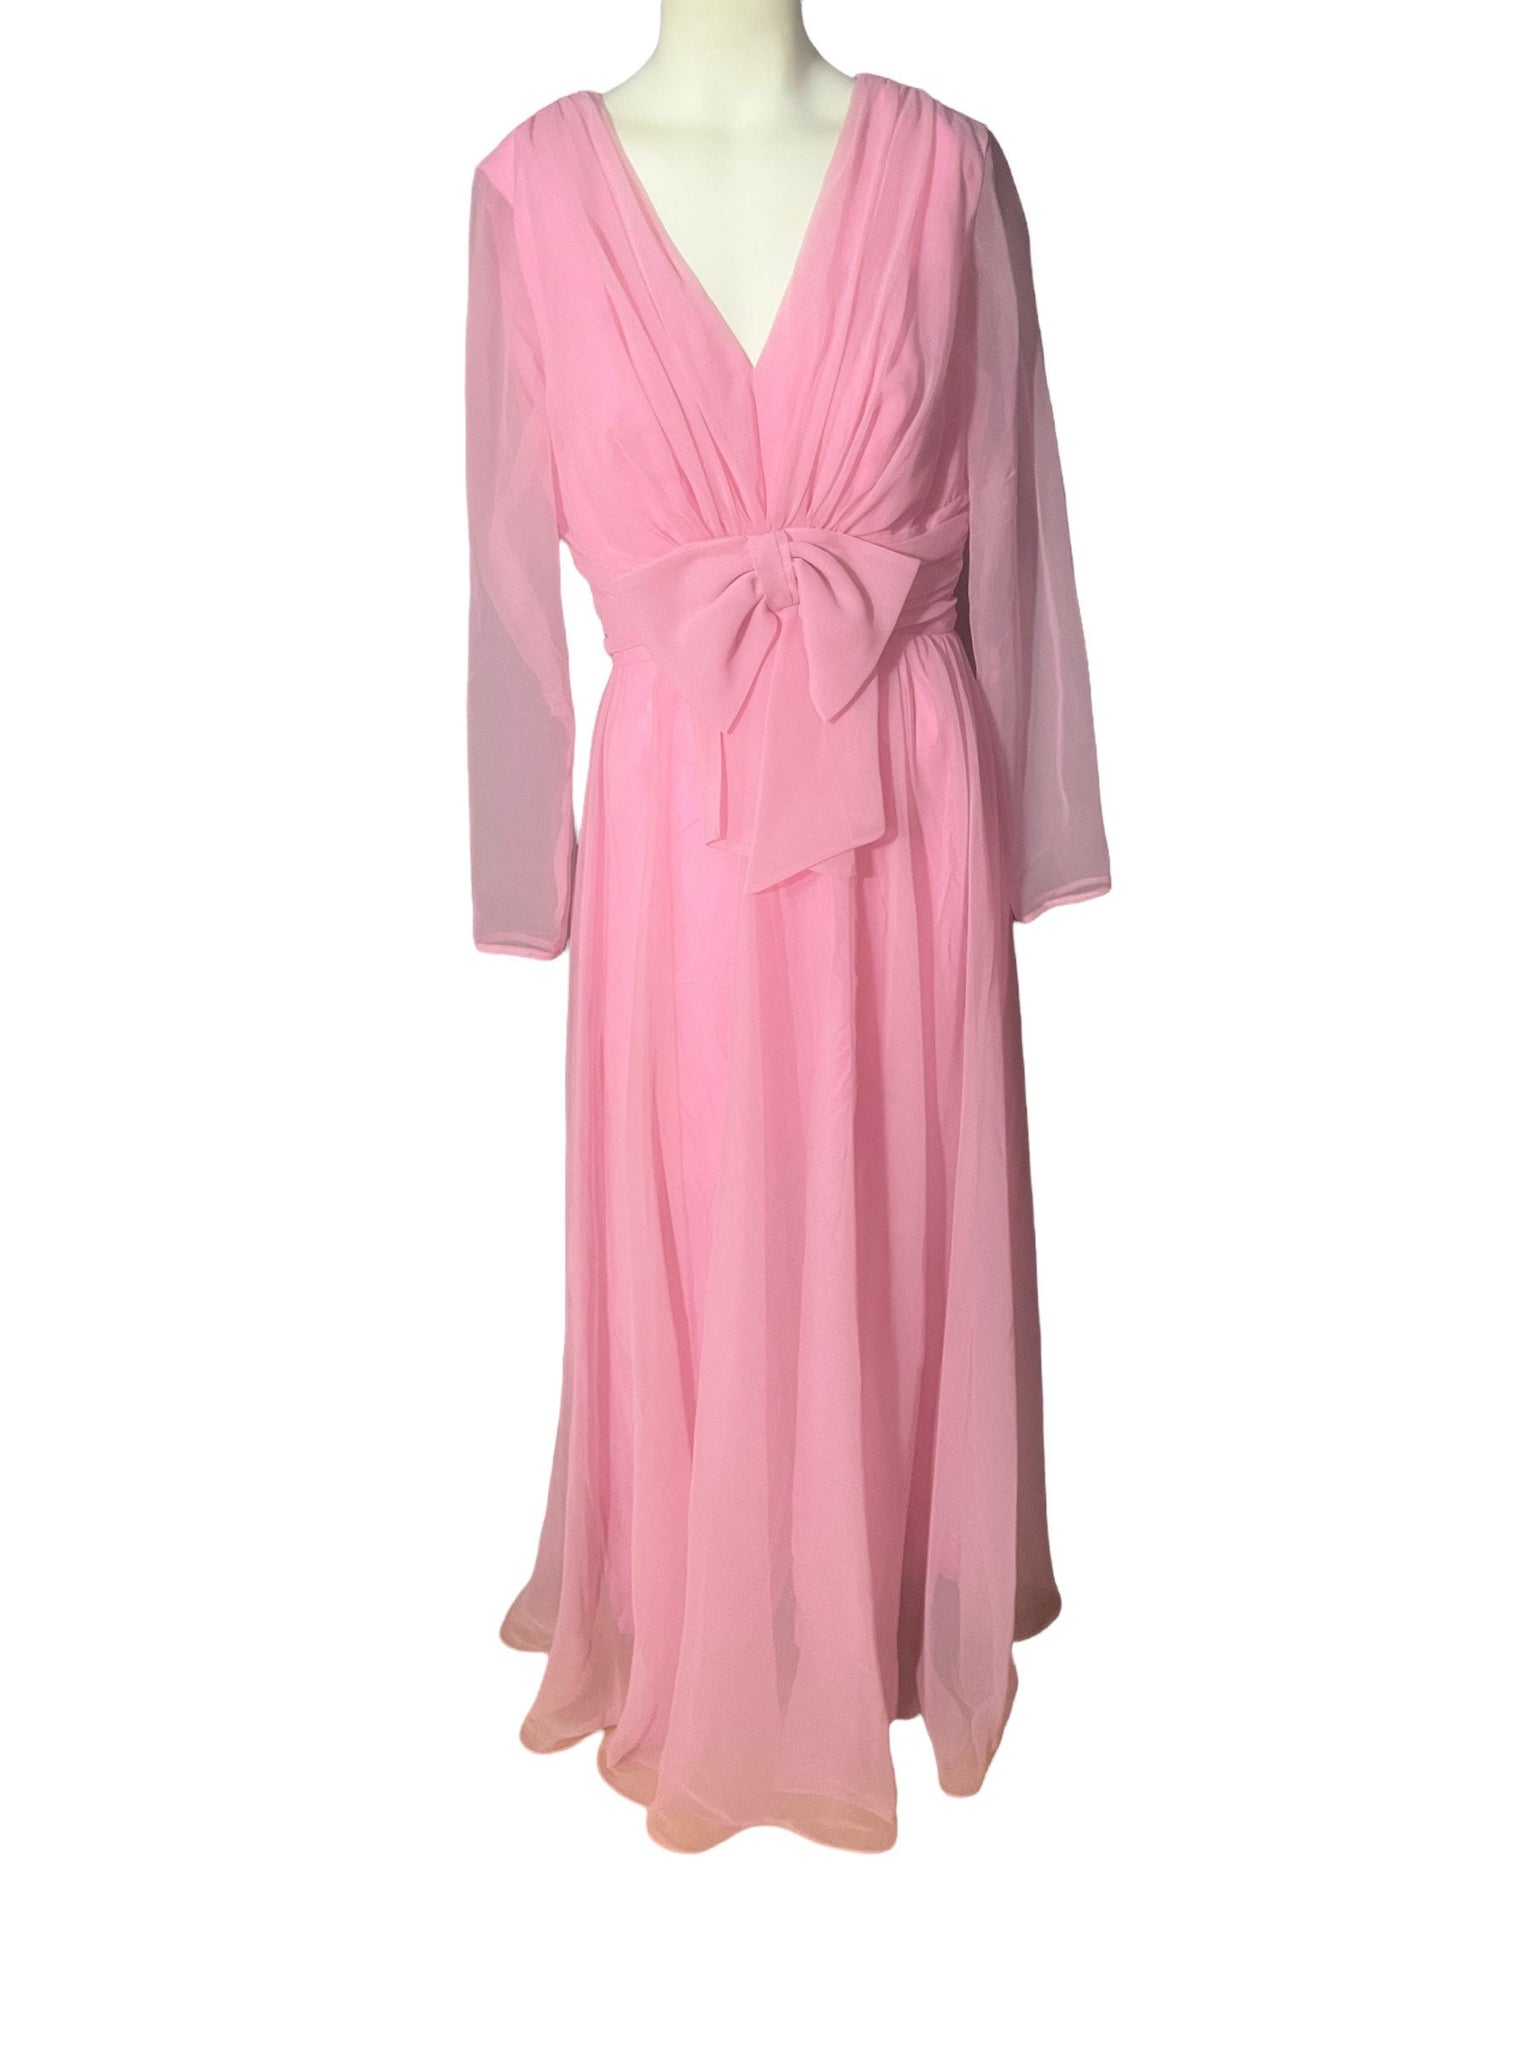 Vintage 60's Miss Elliette pink formal dress M